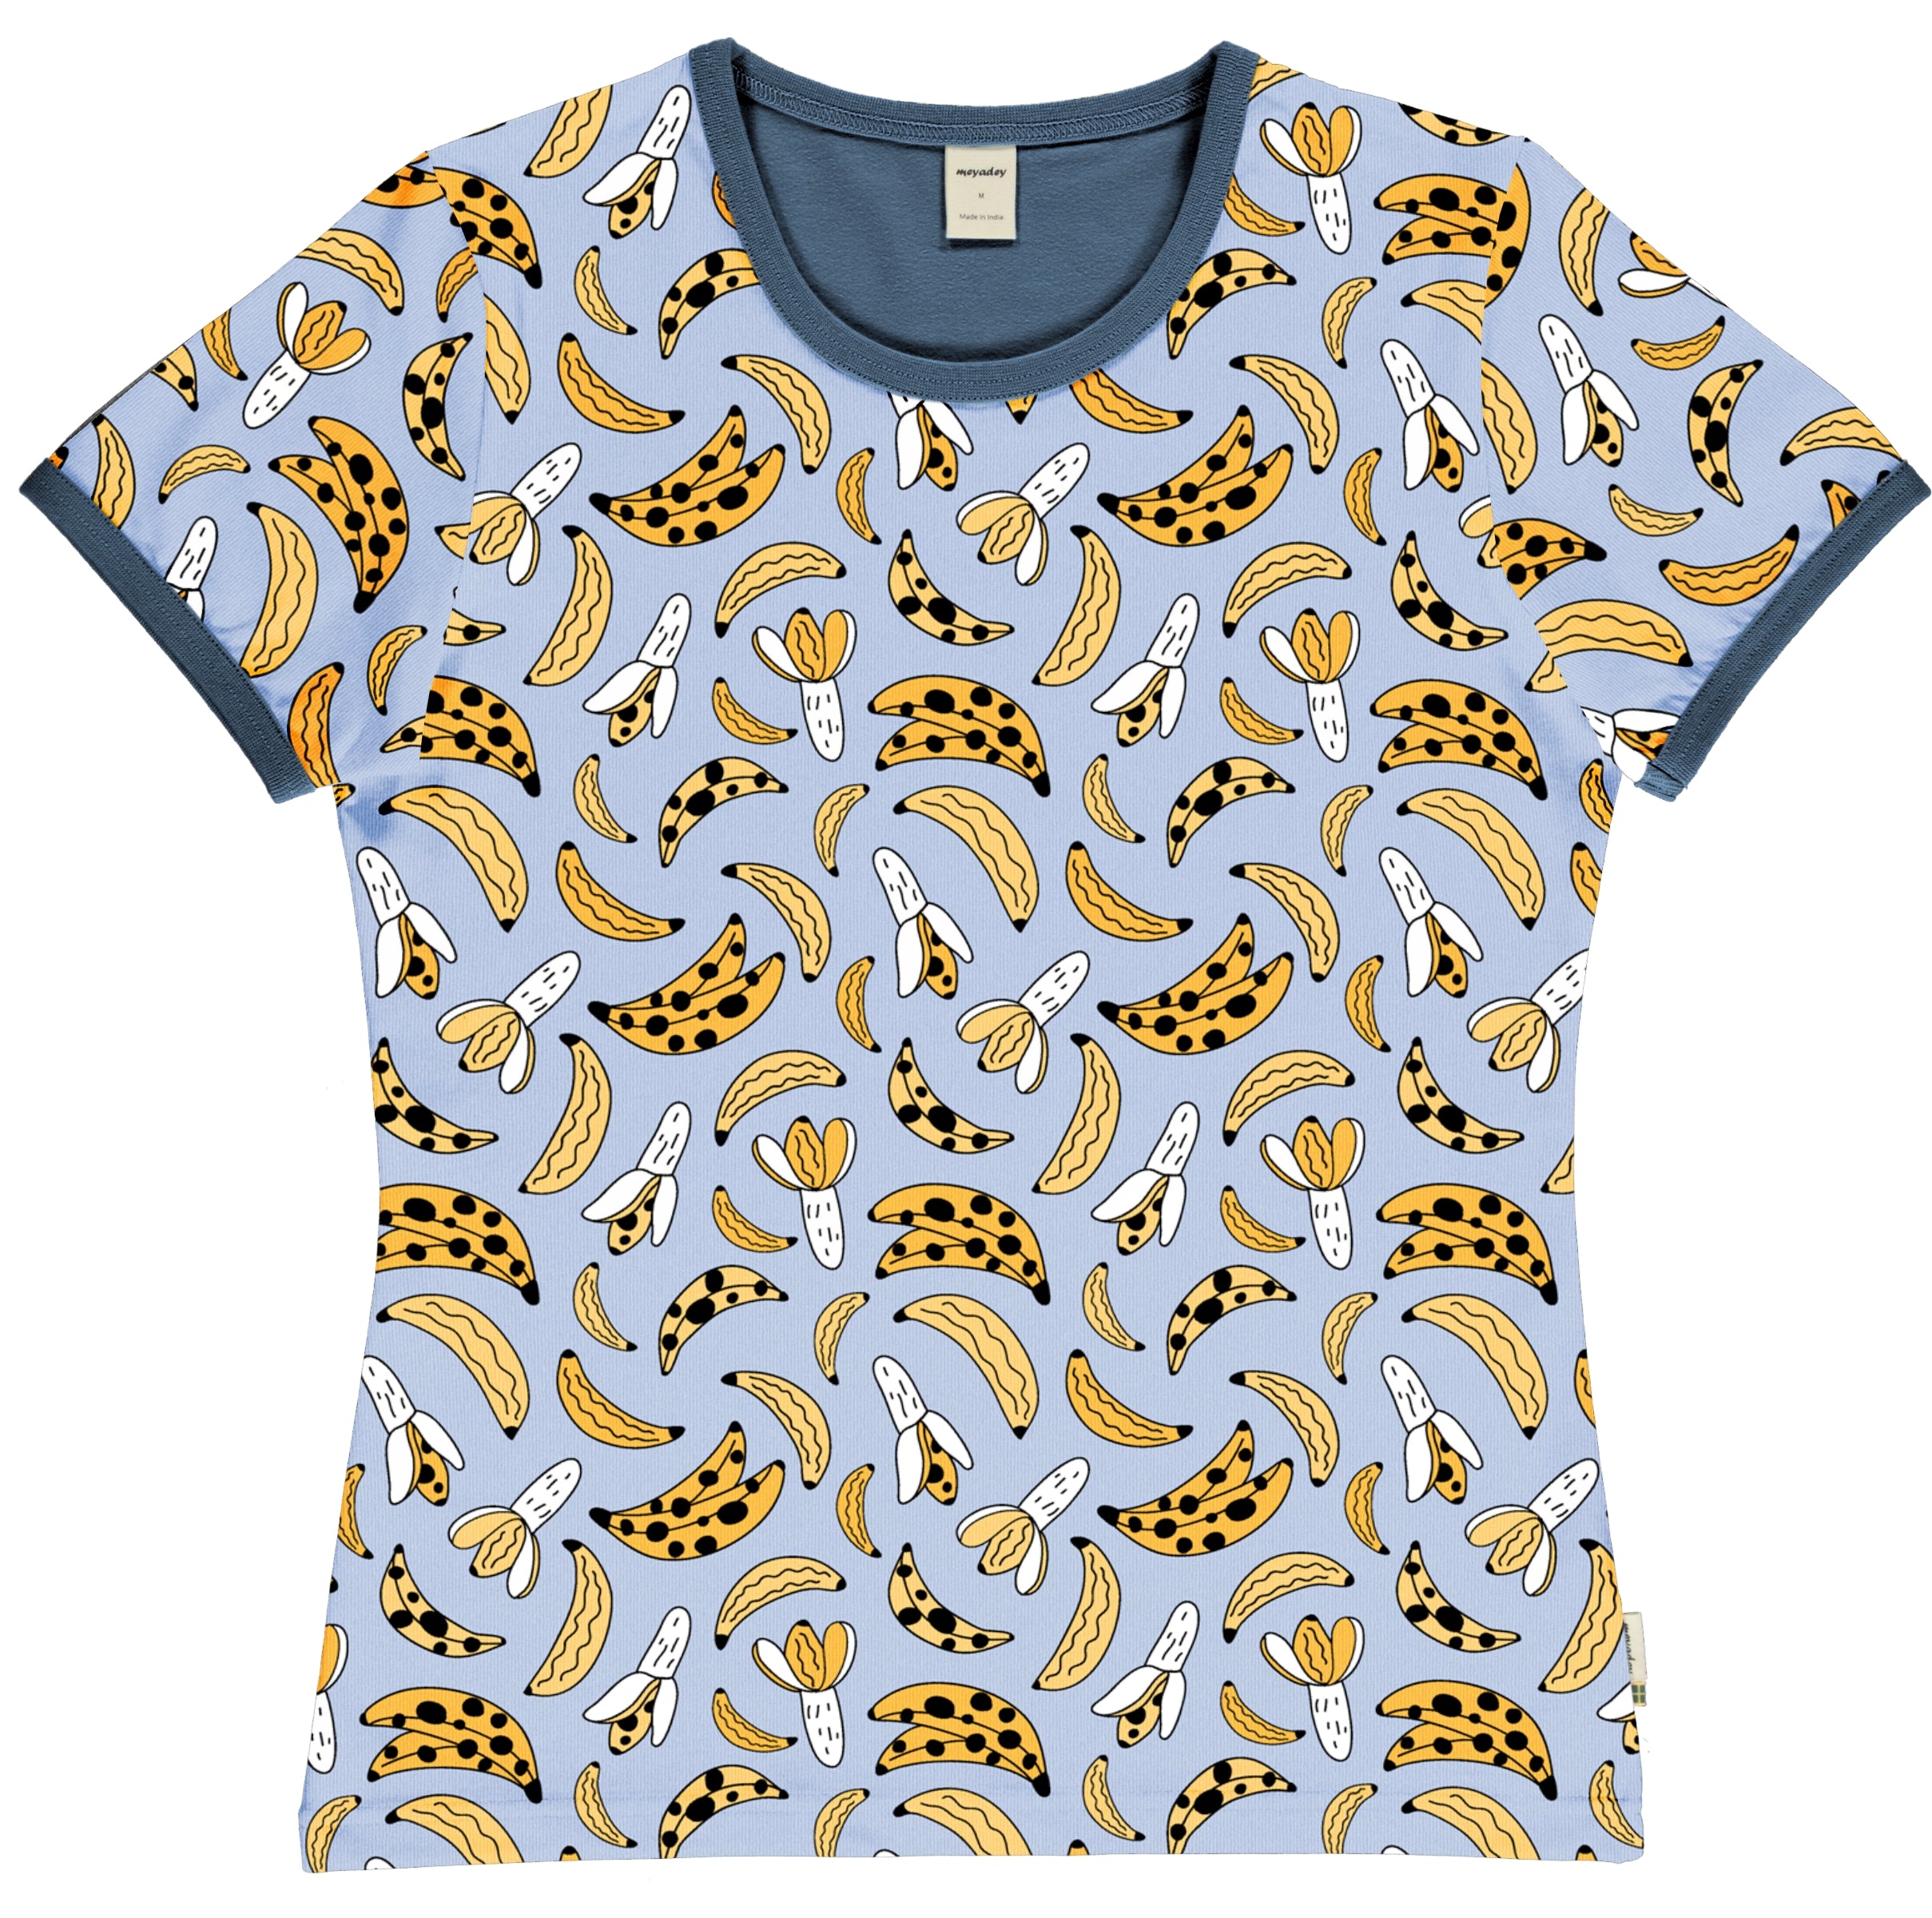 Adult's Banana T-Shirt - Maxomorra